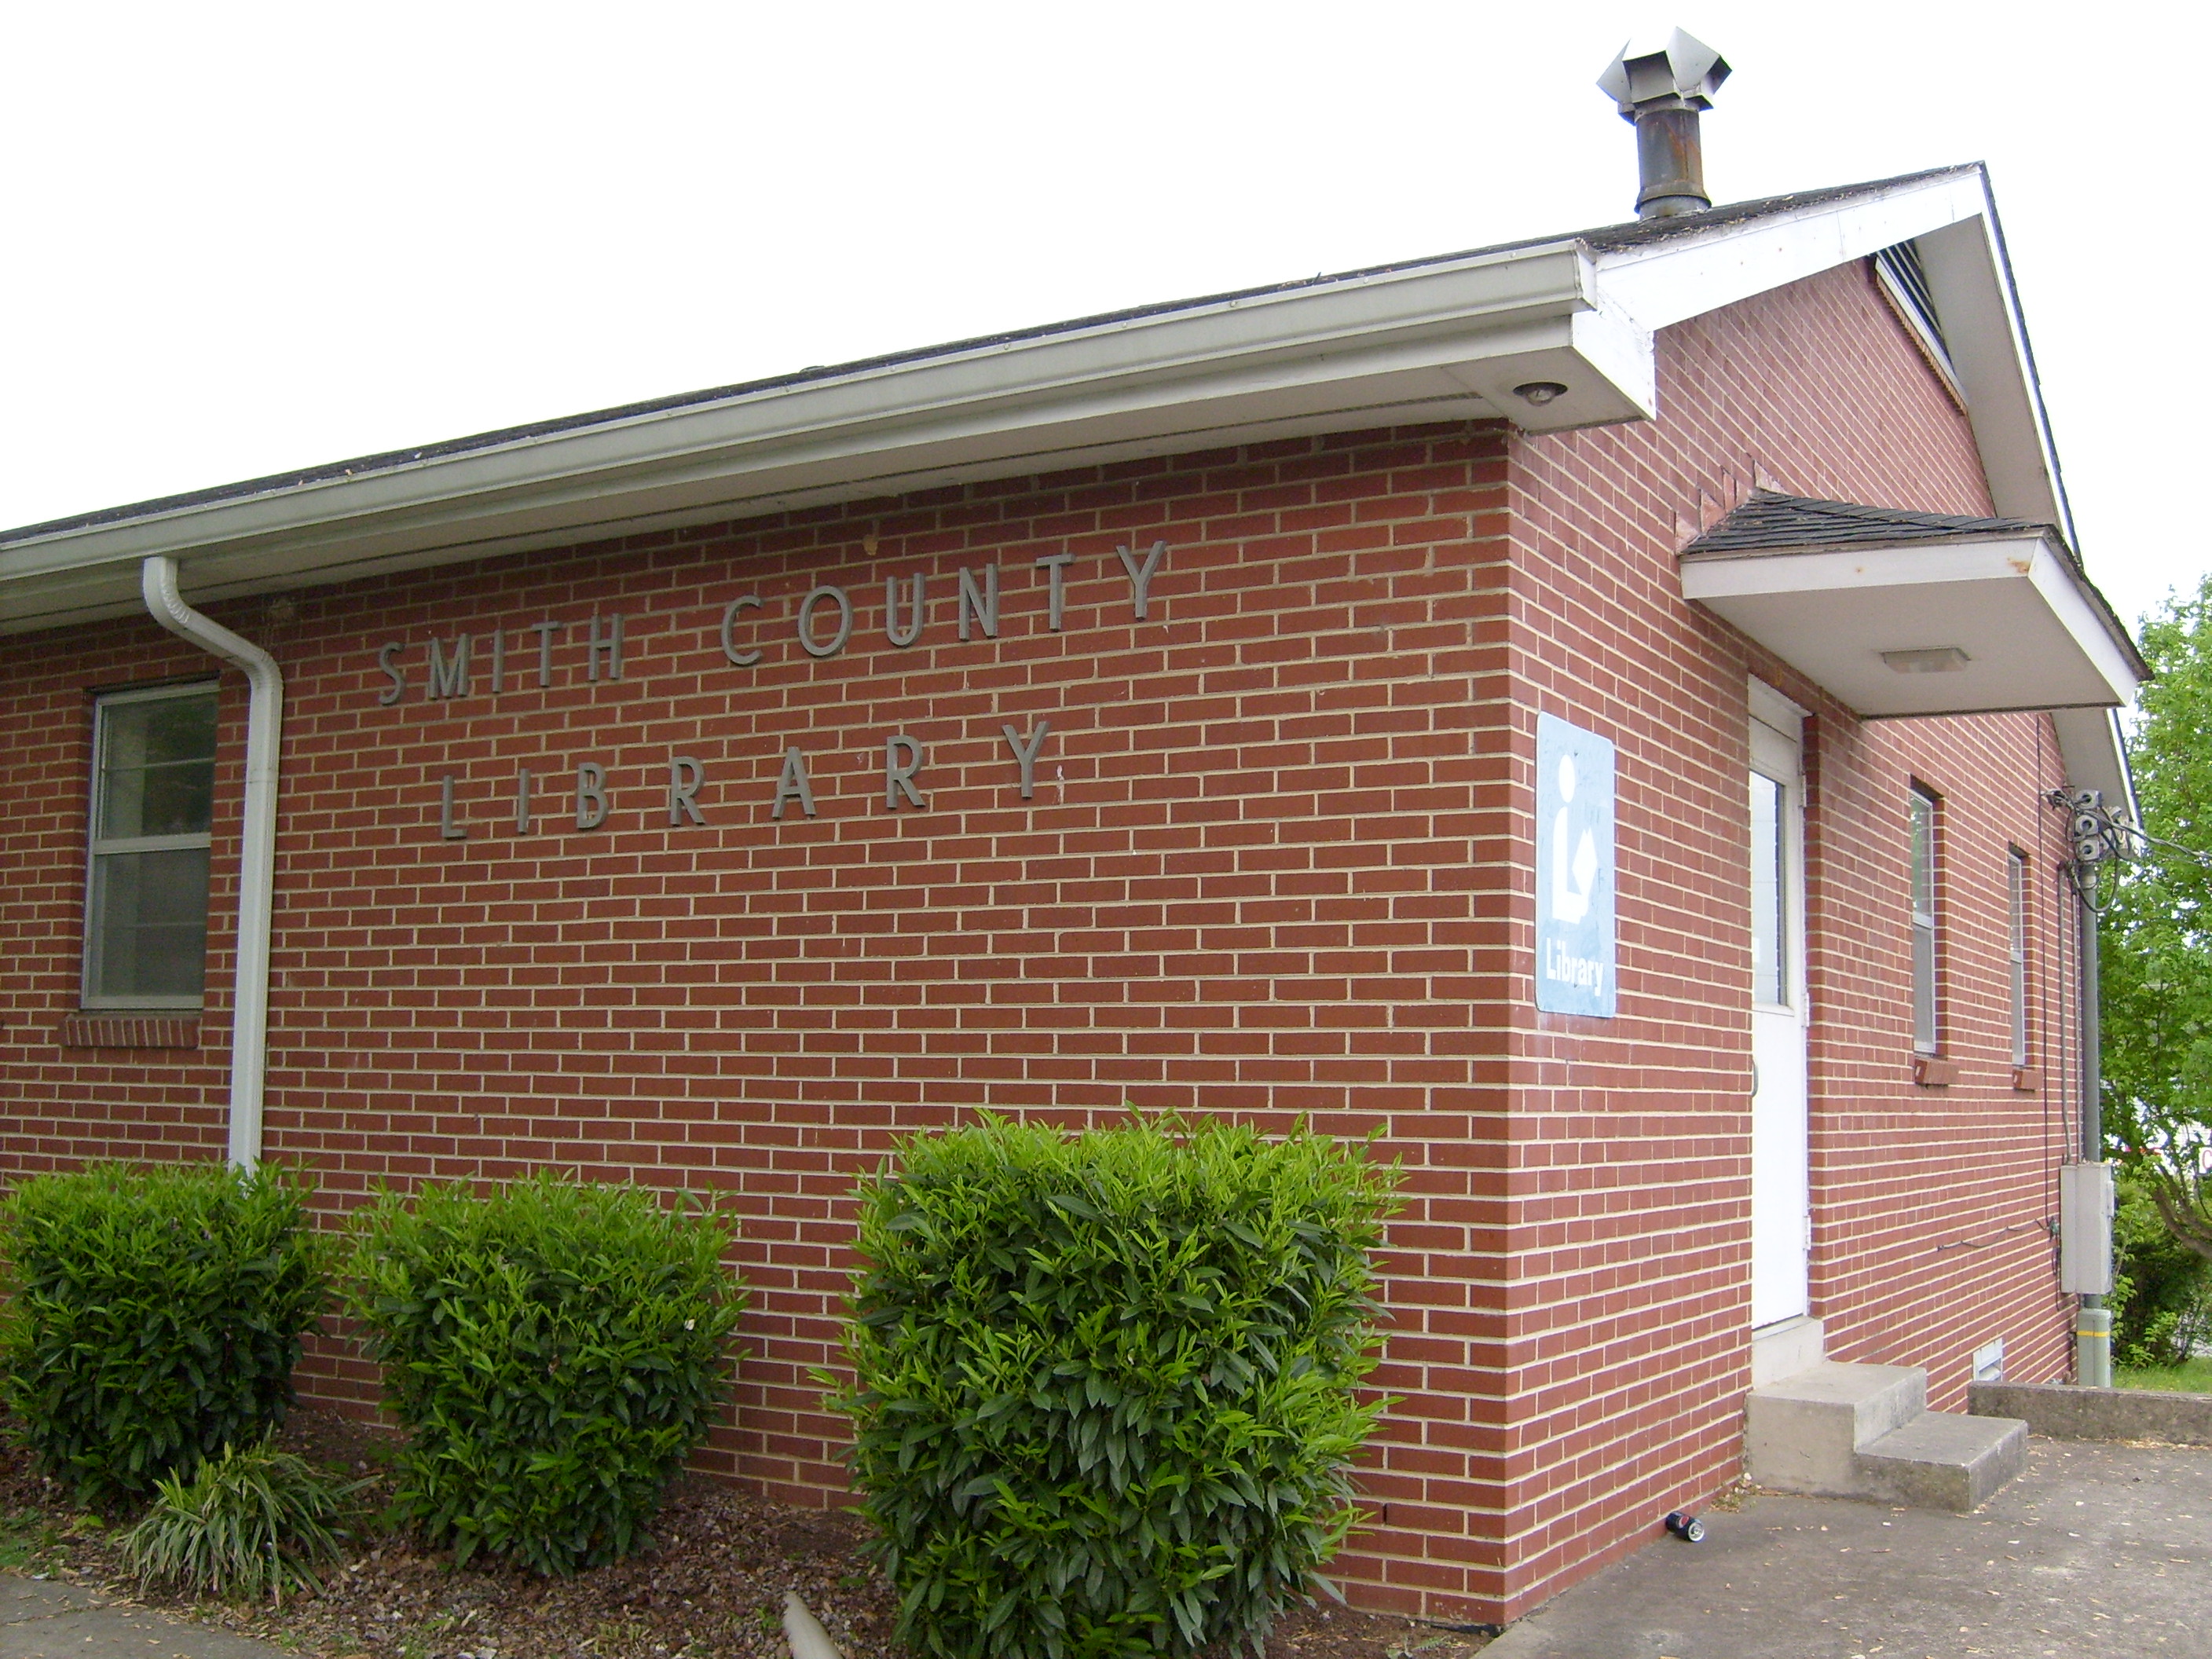 Smith County Public Library